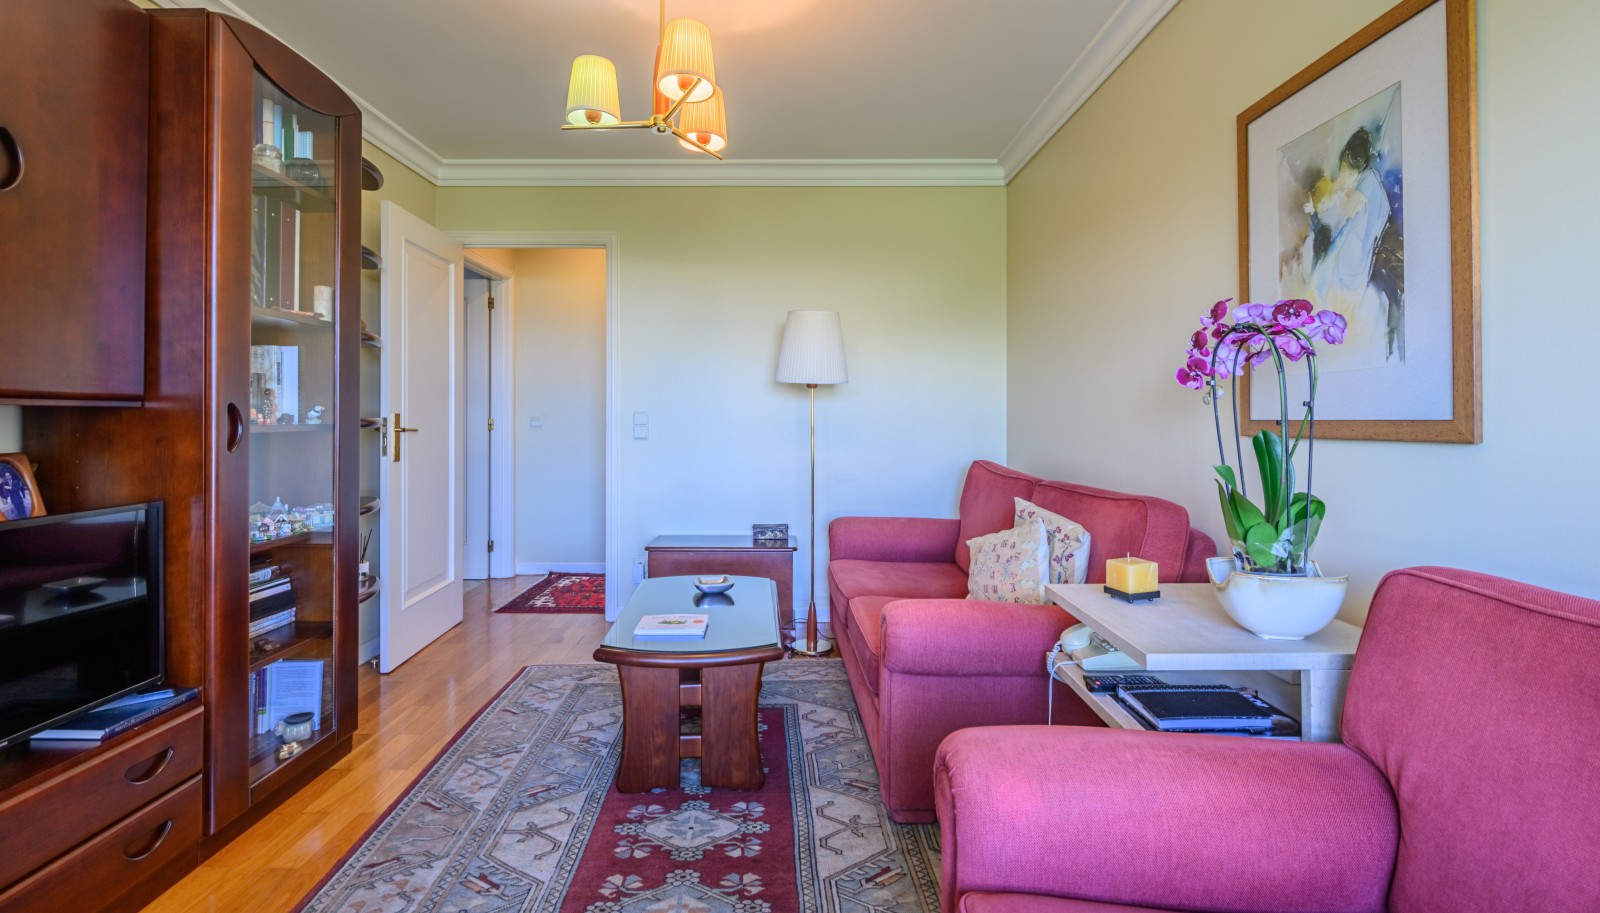 Appartement de 5 chambres avec balcon, à vendre, à V. N. Gaia, Porto, Portugal_236331